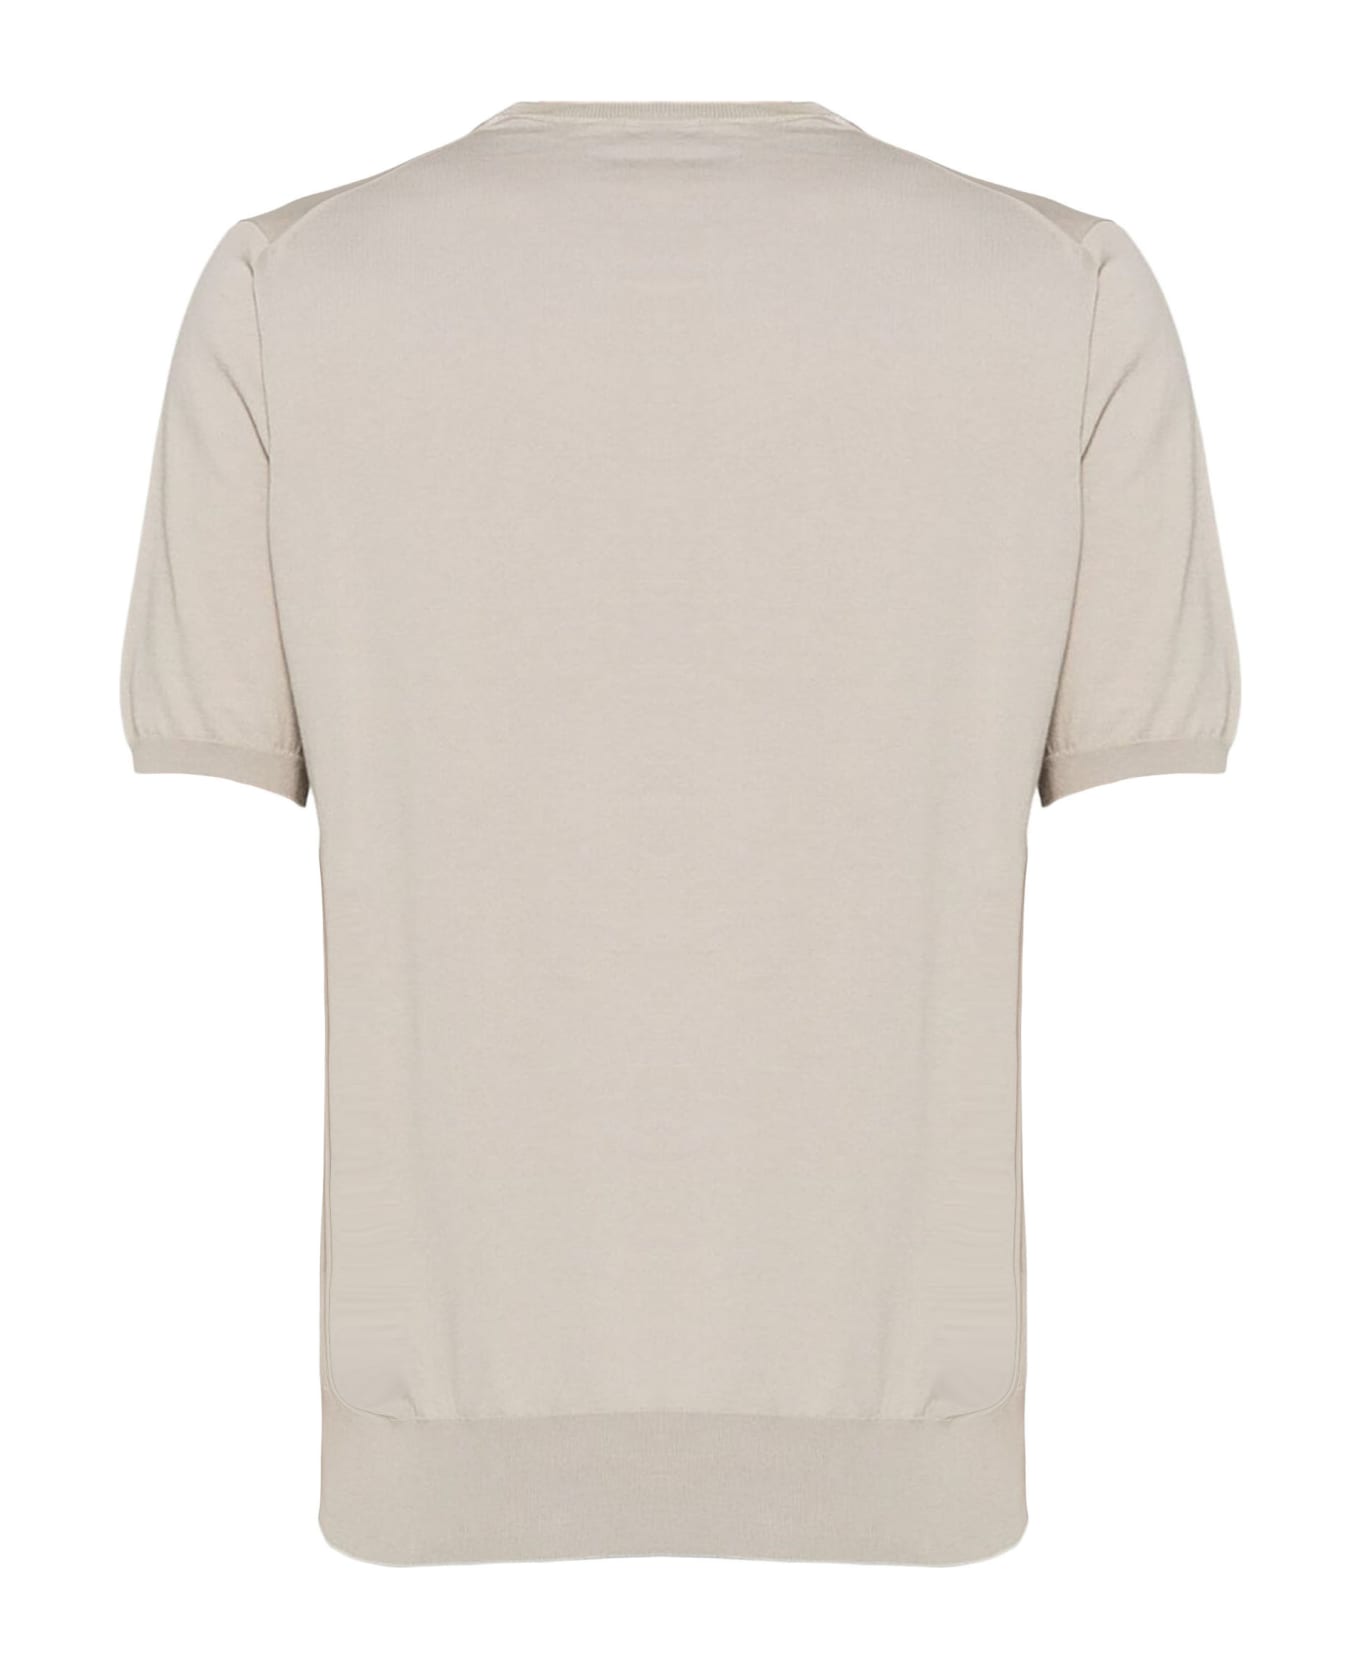 Cruciani Beige Cotton T-shirt - Beige ニットウェア